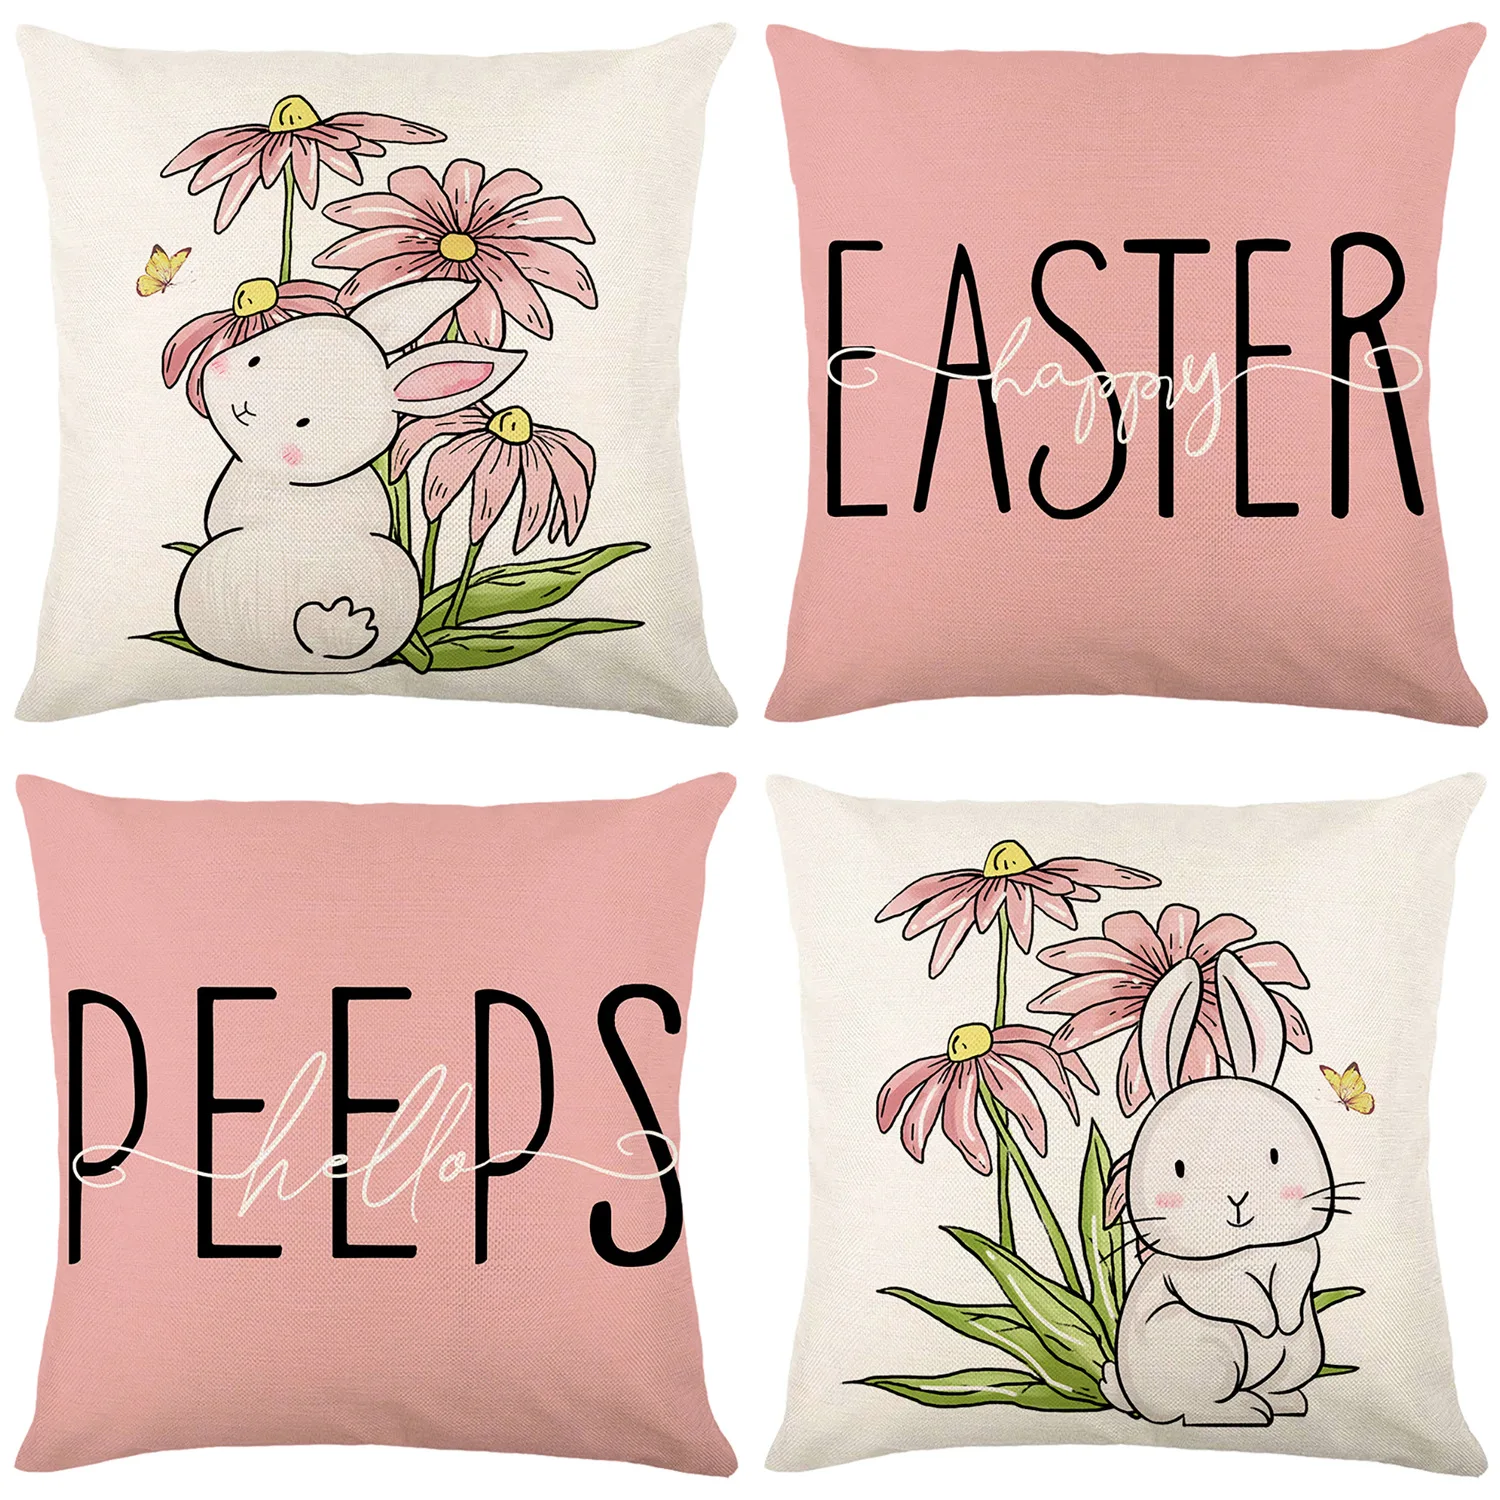 

Easter Kids Cushions Cover 45x45cm almofadas decorativas para sofá Flowers Bunny Eggs Carrot Printed Pillow Covers